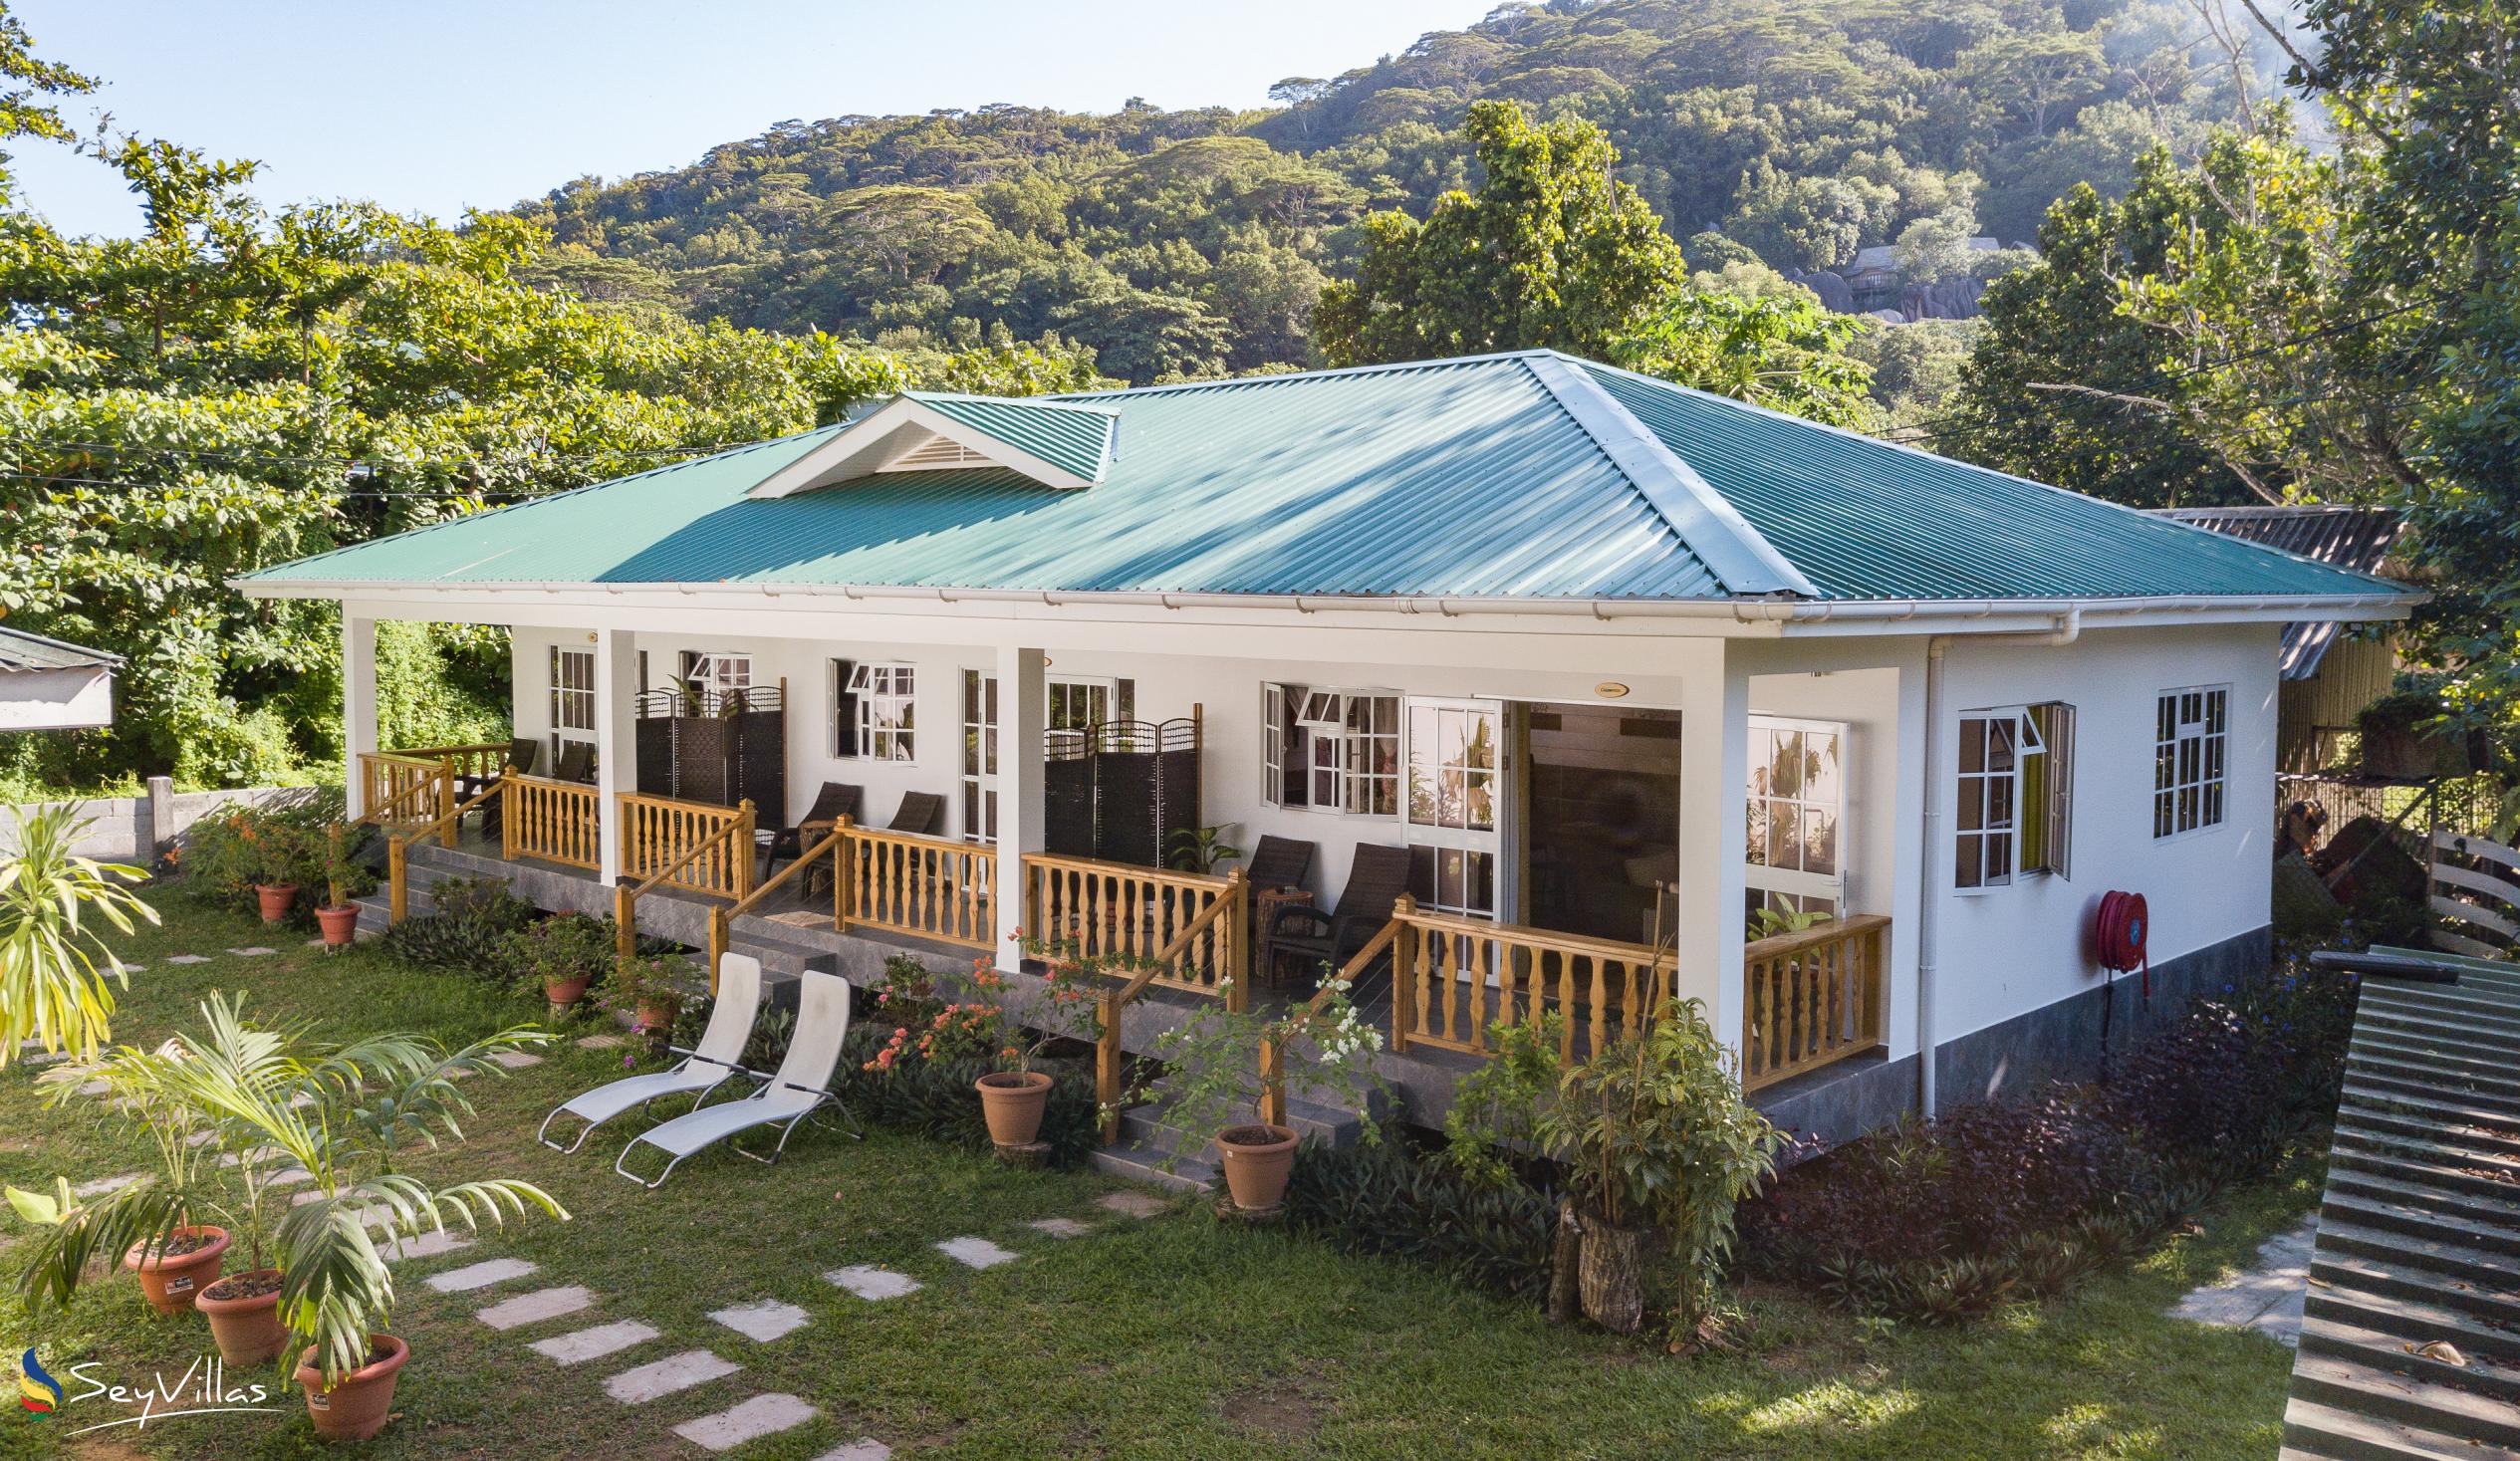 Foto 1: Villa Charette - Aussenbereich - La Digue (Seychellen)